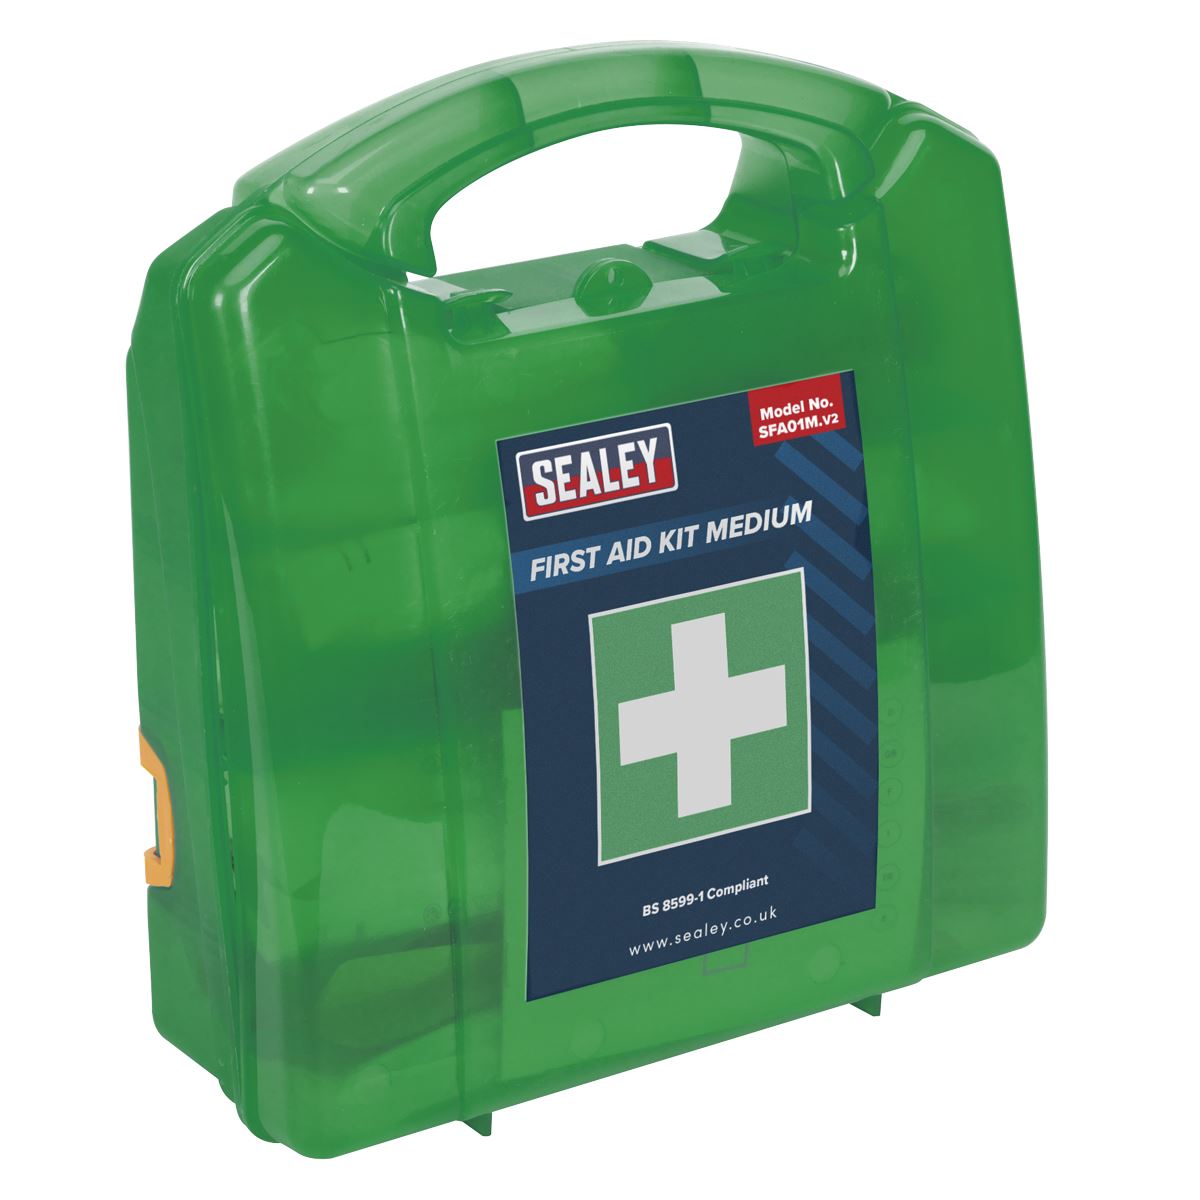 Sealey First Aid Kit Medium - BS 8599-1 Compliant